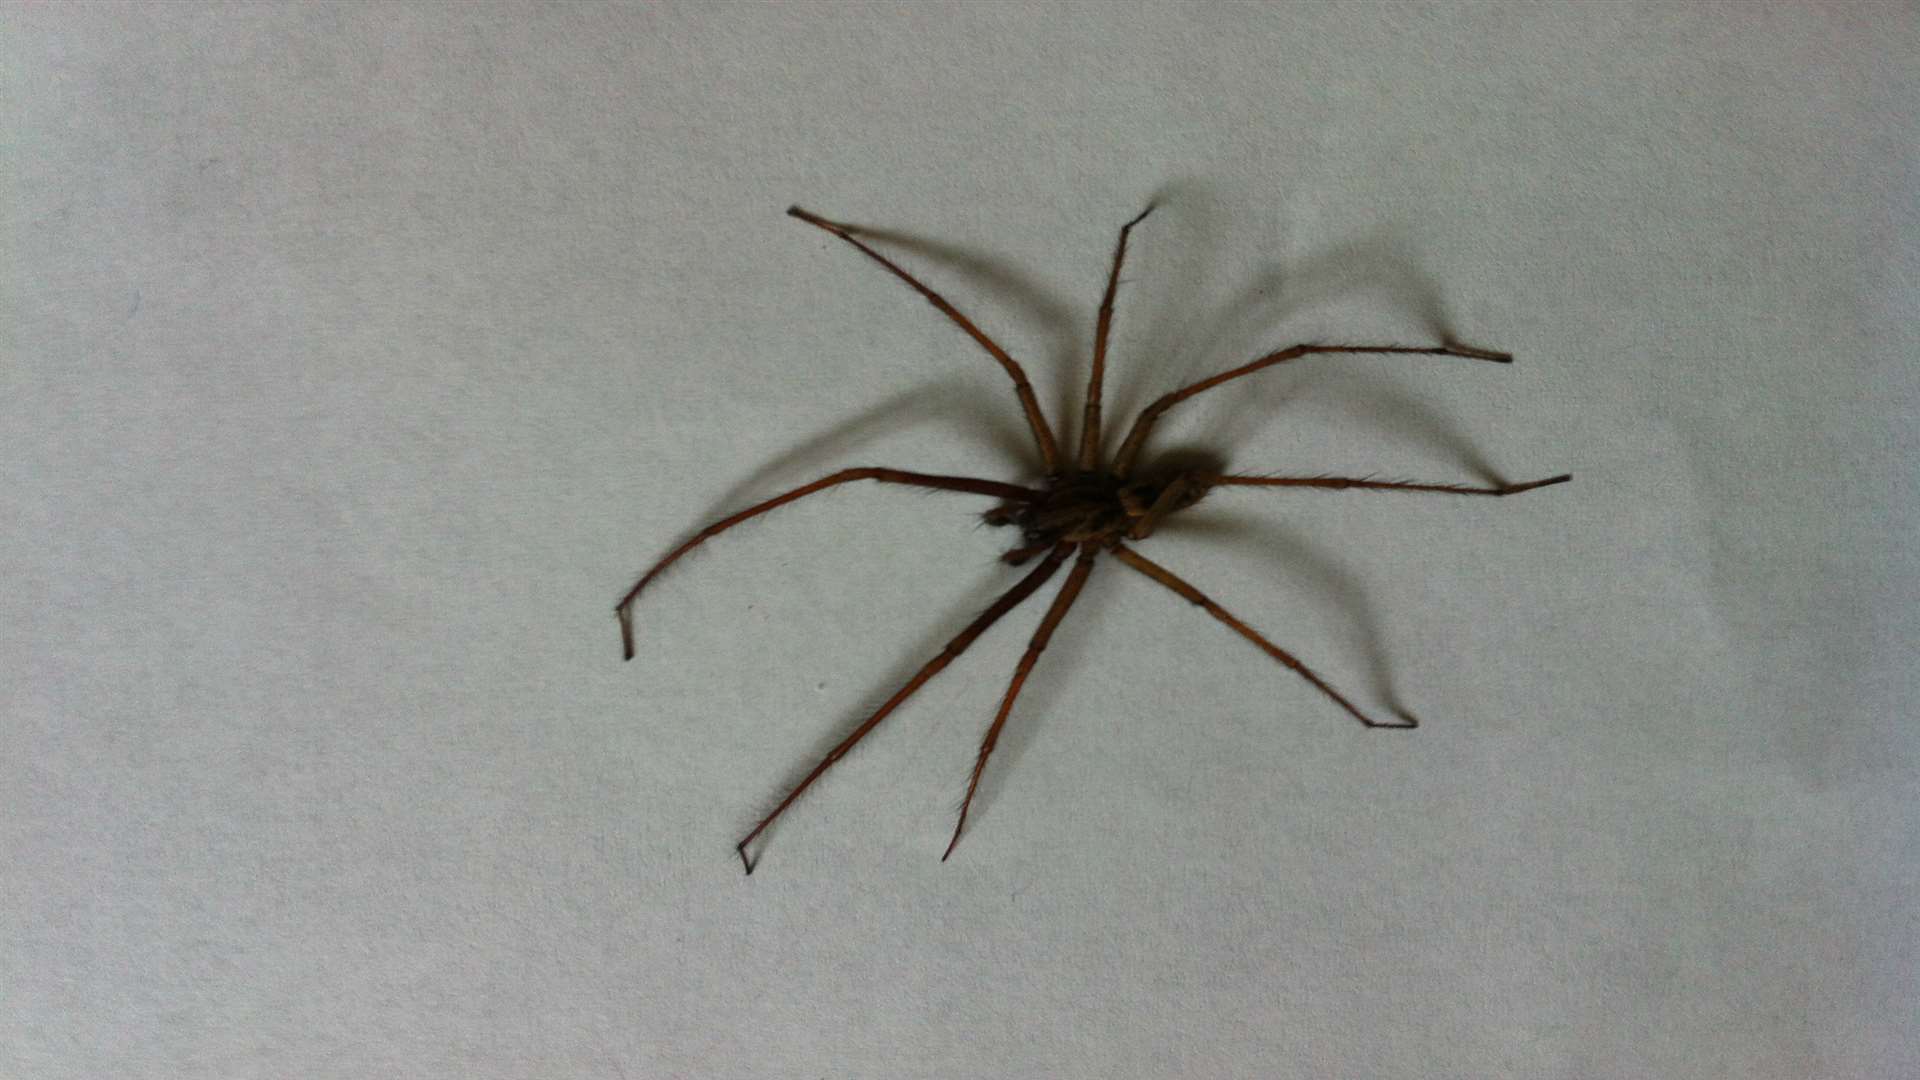 Gillingham Girl Bitten By Uks Most Venomous Spider The False Widow